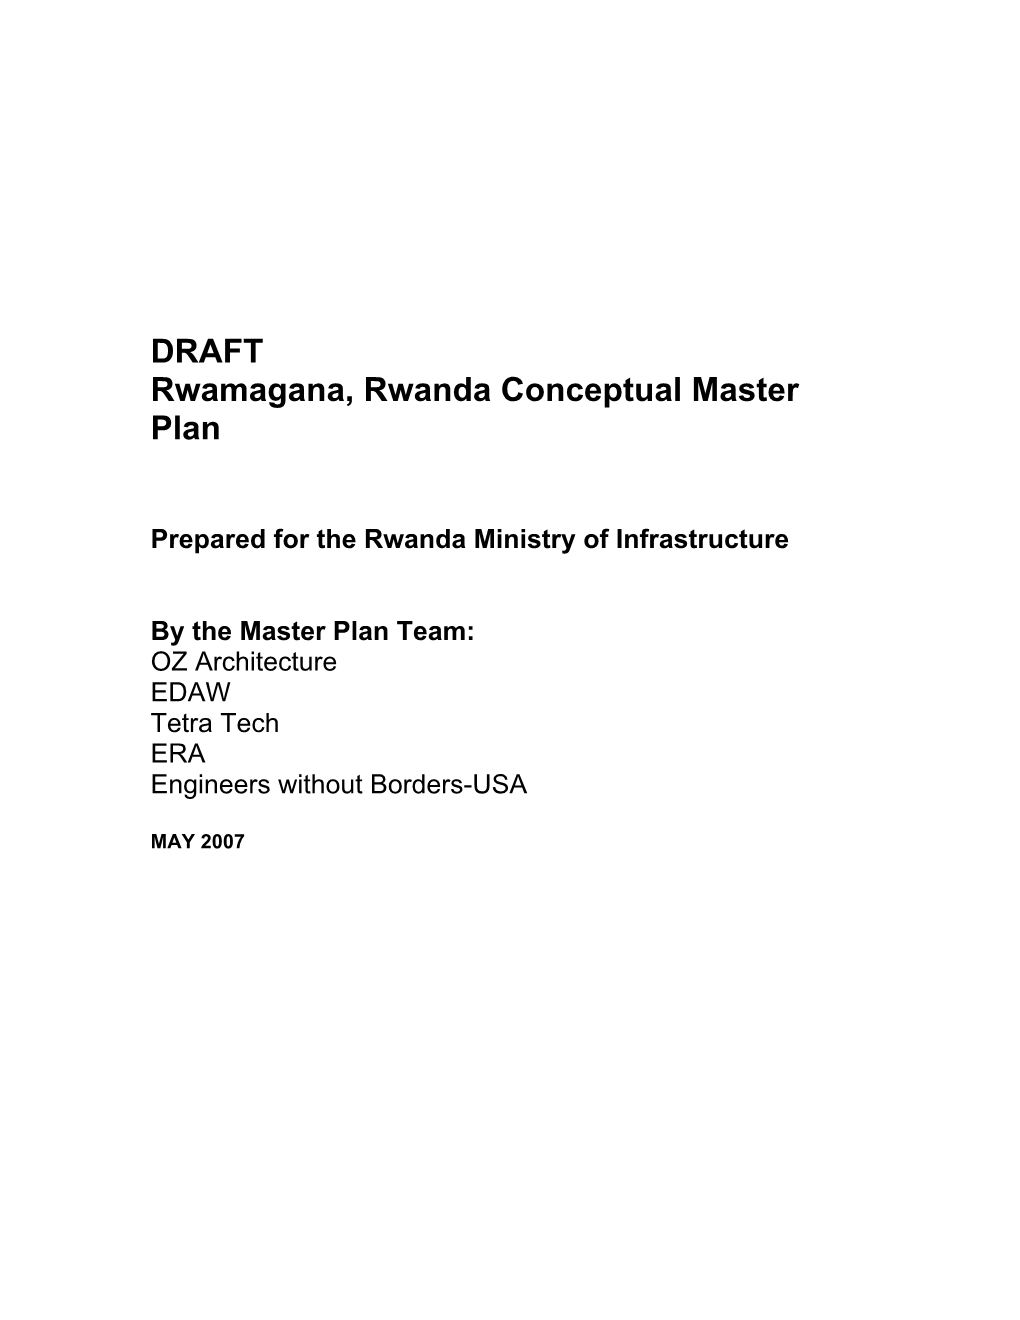 DRAFT Rwamagana, Rwanda Conceptual Master Plan